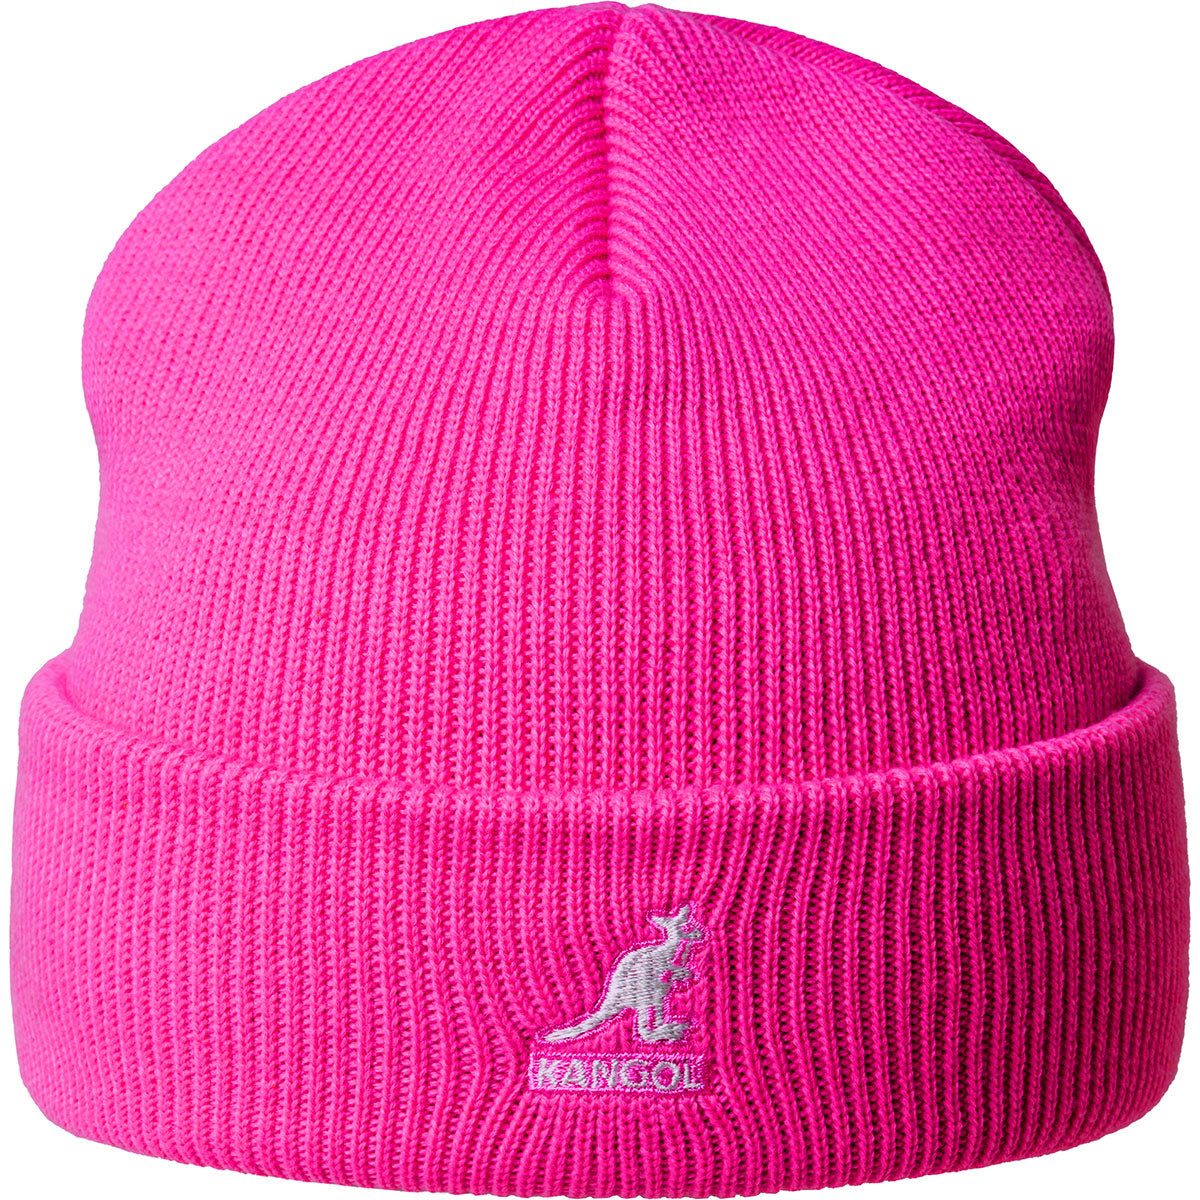 Kangol Cardinal 2-way Beanie Acrylic Cuff Pull On Beanie Hat - Electric Pink